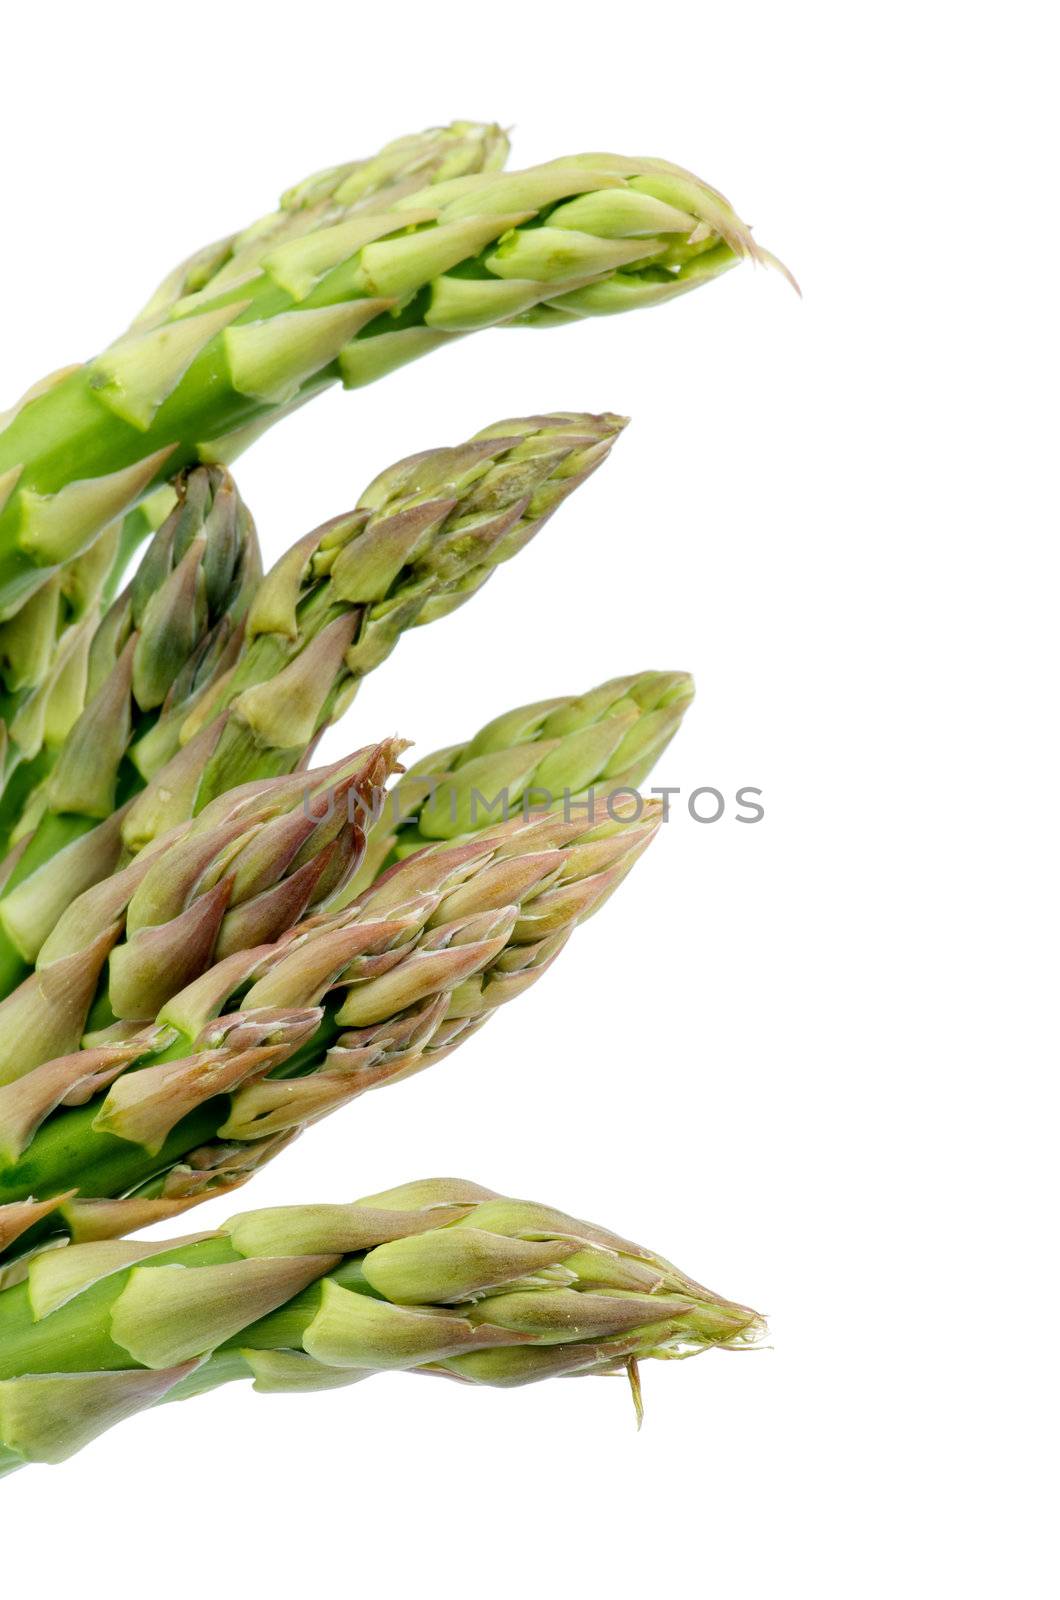 Asparagus by zhekos